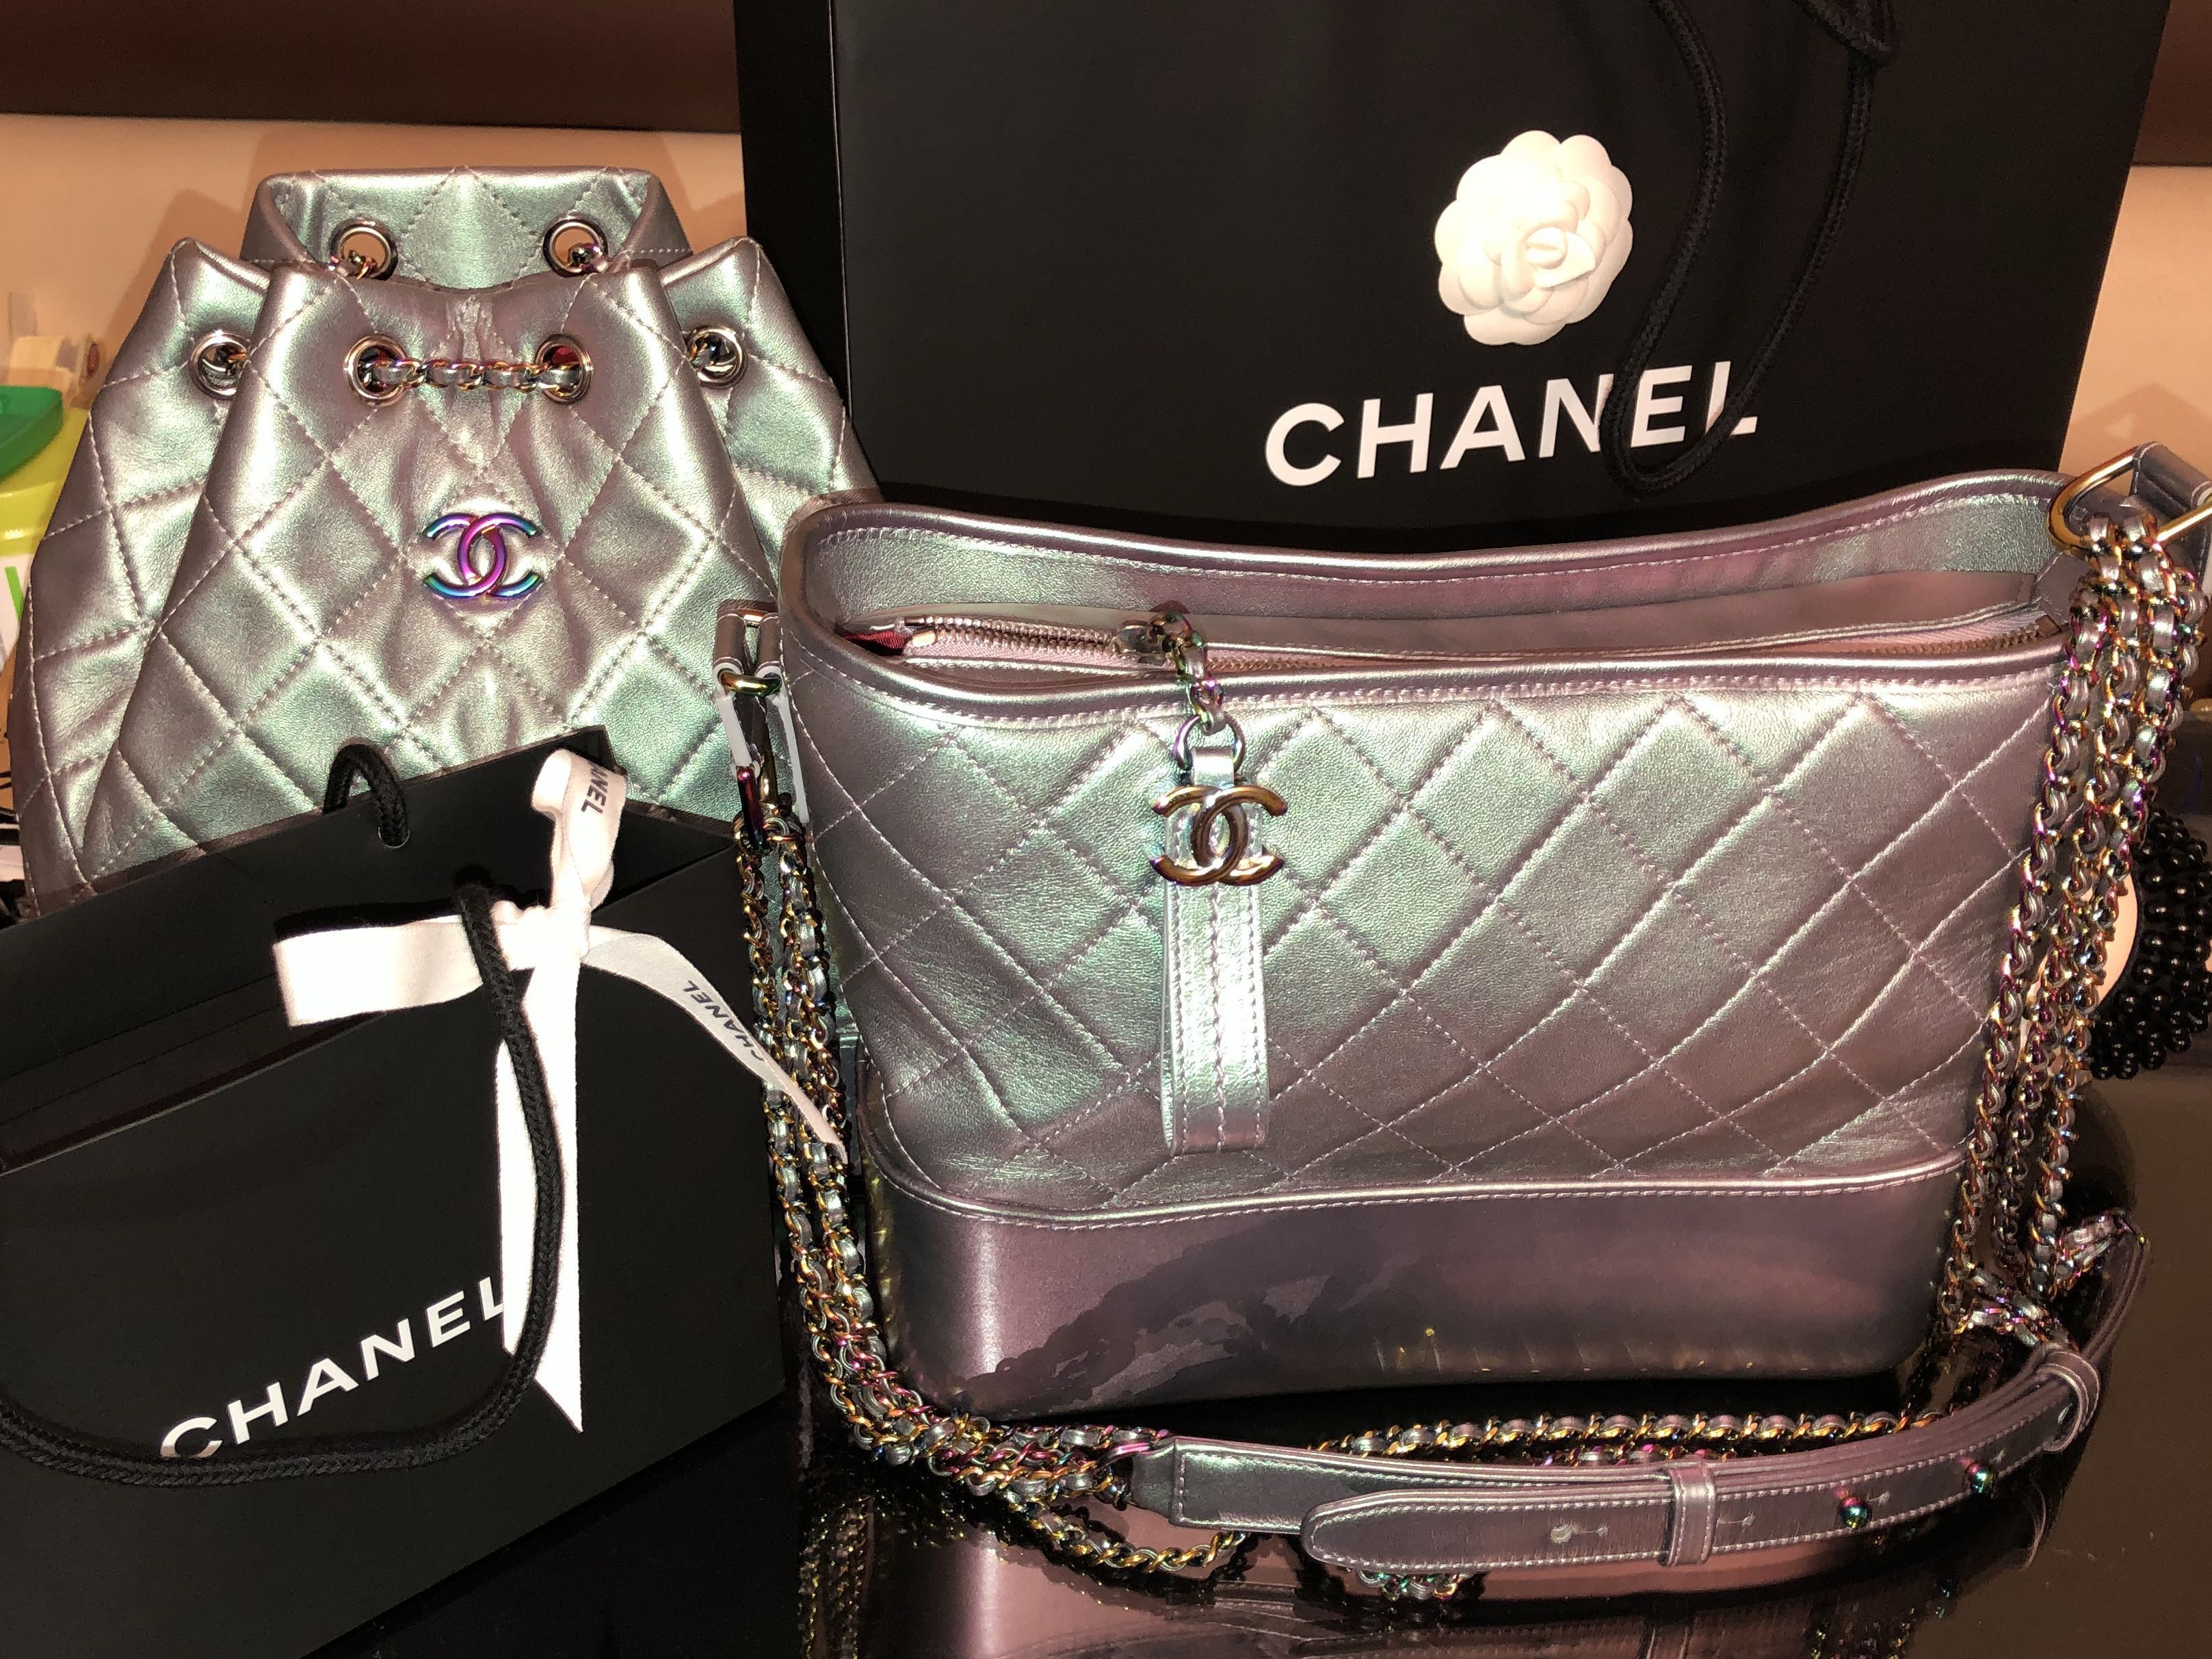 Chanel Gabrielle hobo in medium purple iridescent rainbow hardware